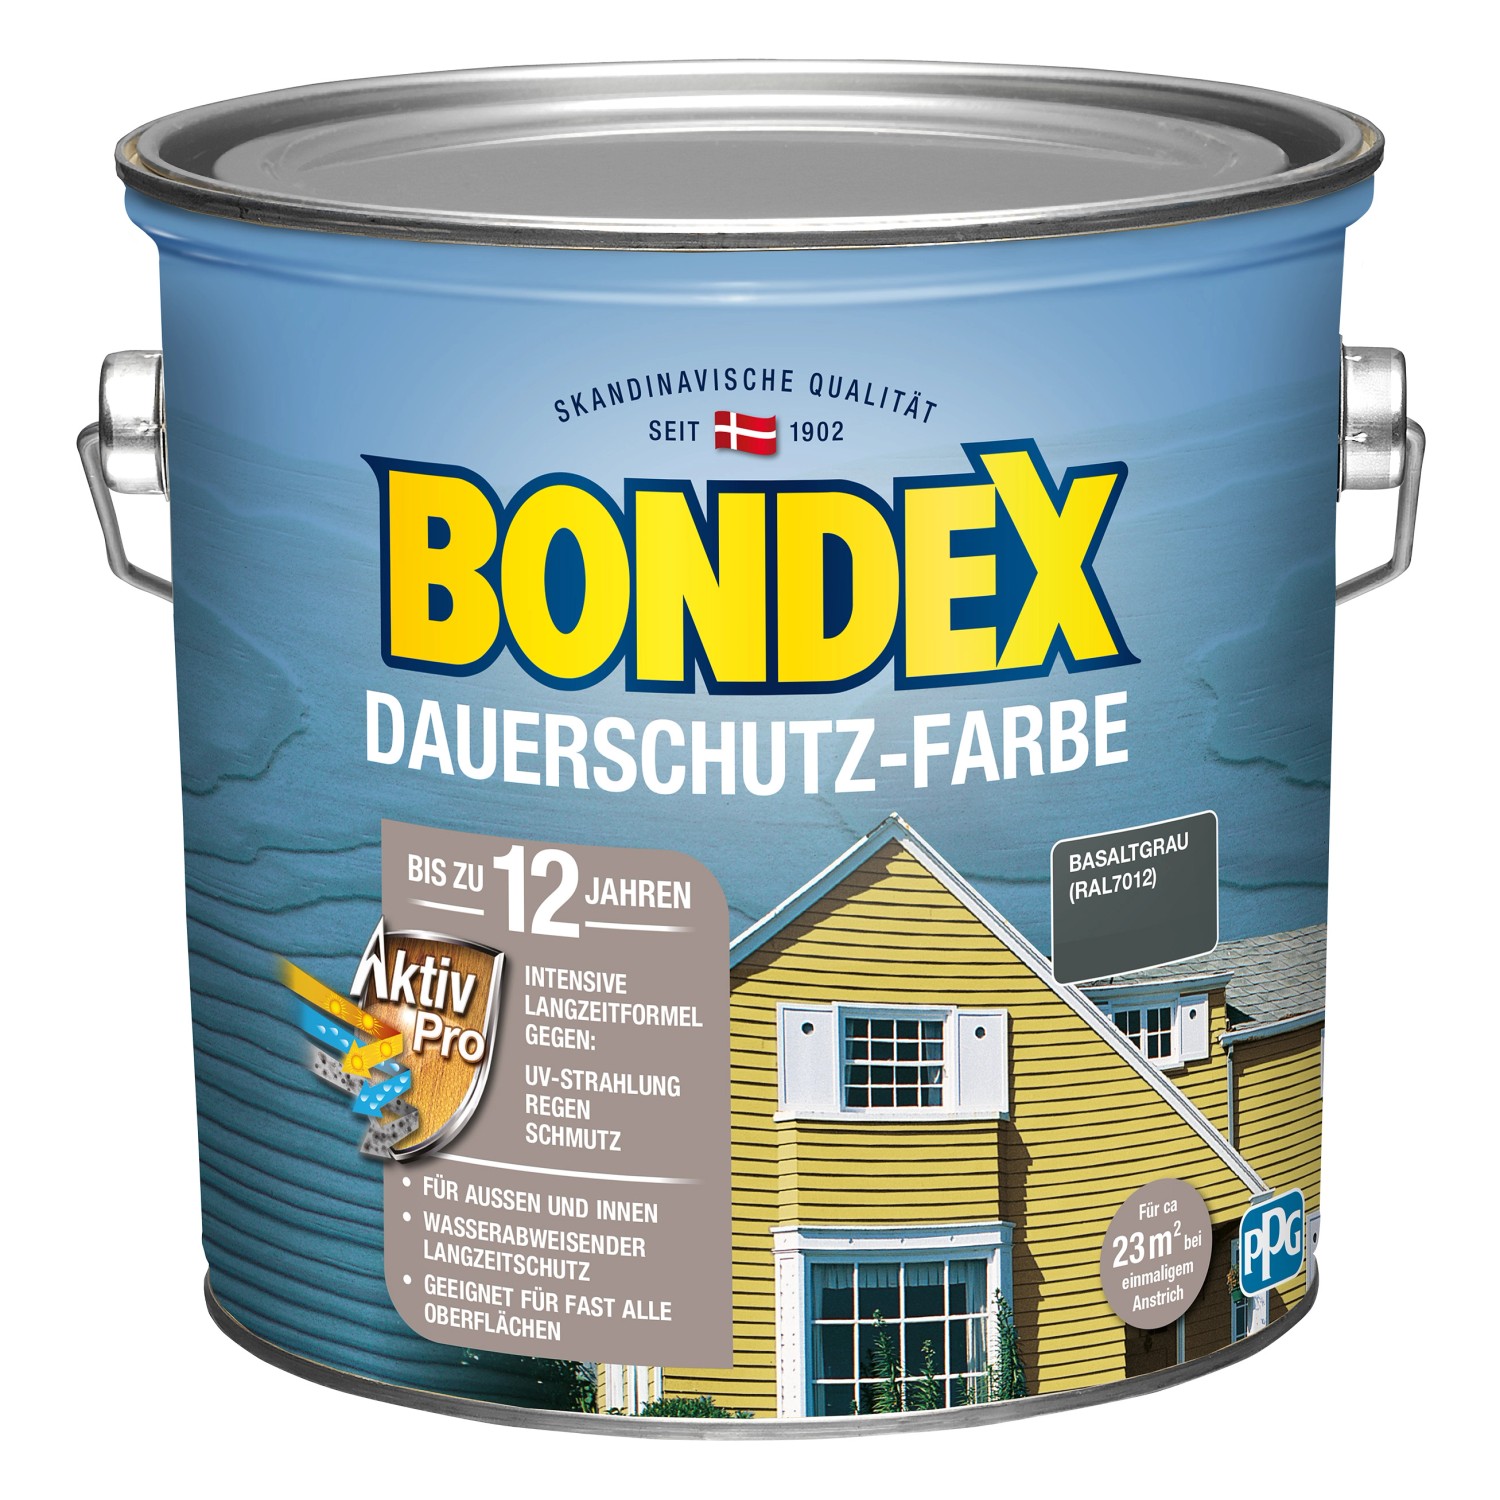 Bondex Dauerschutz-Farbe Basaltgrau (RAL 7012) seidenglänzend 2,5 l